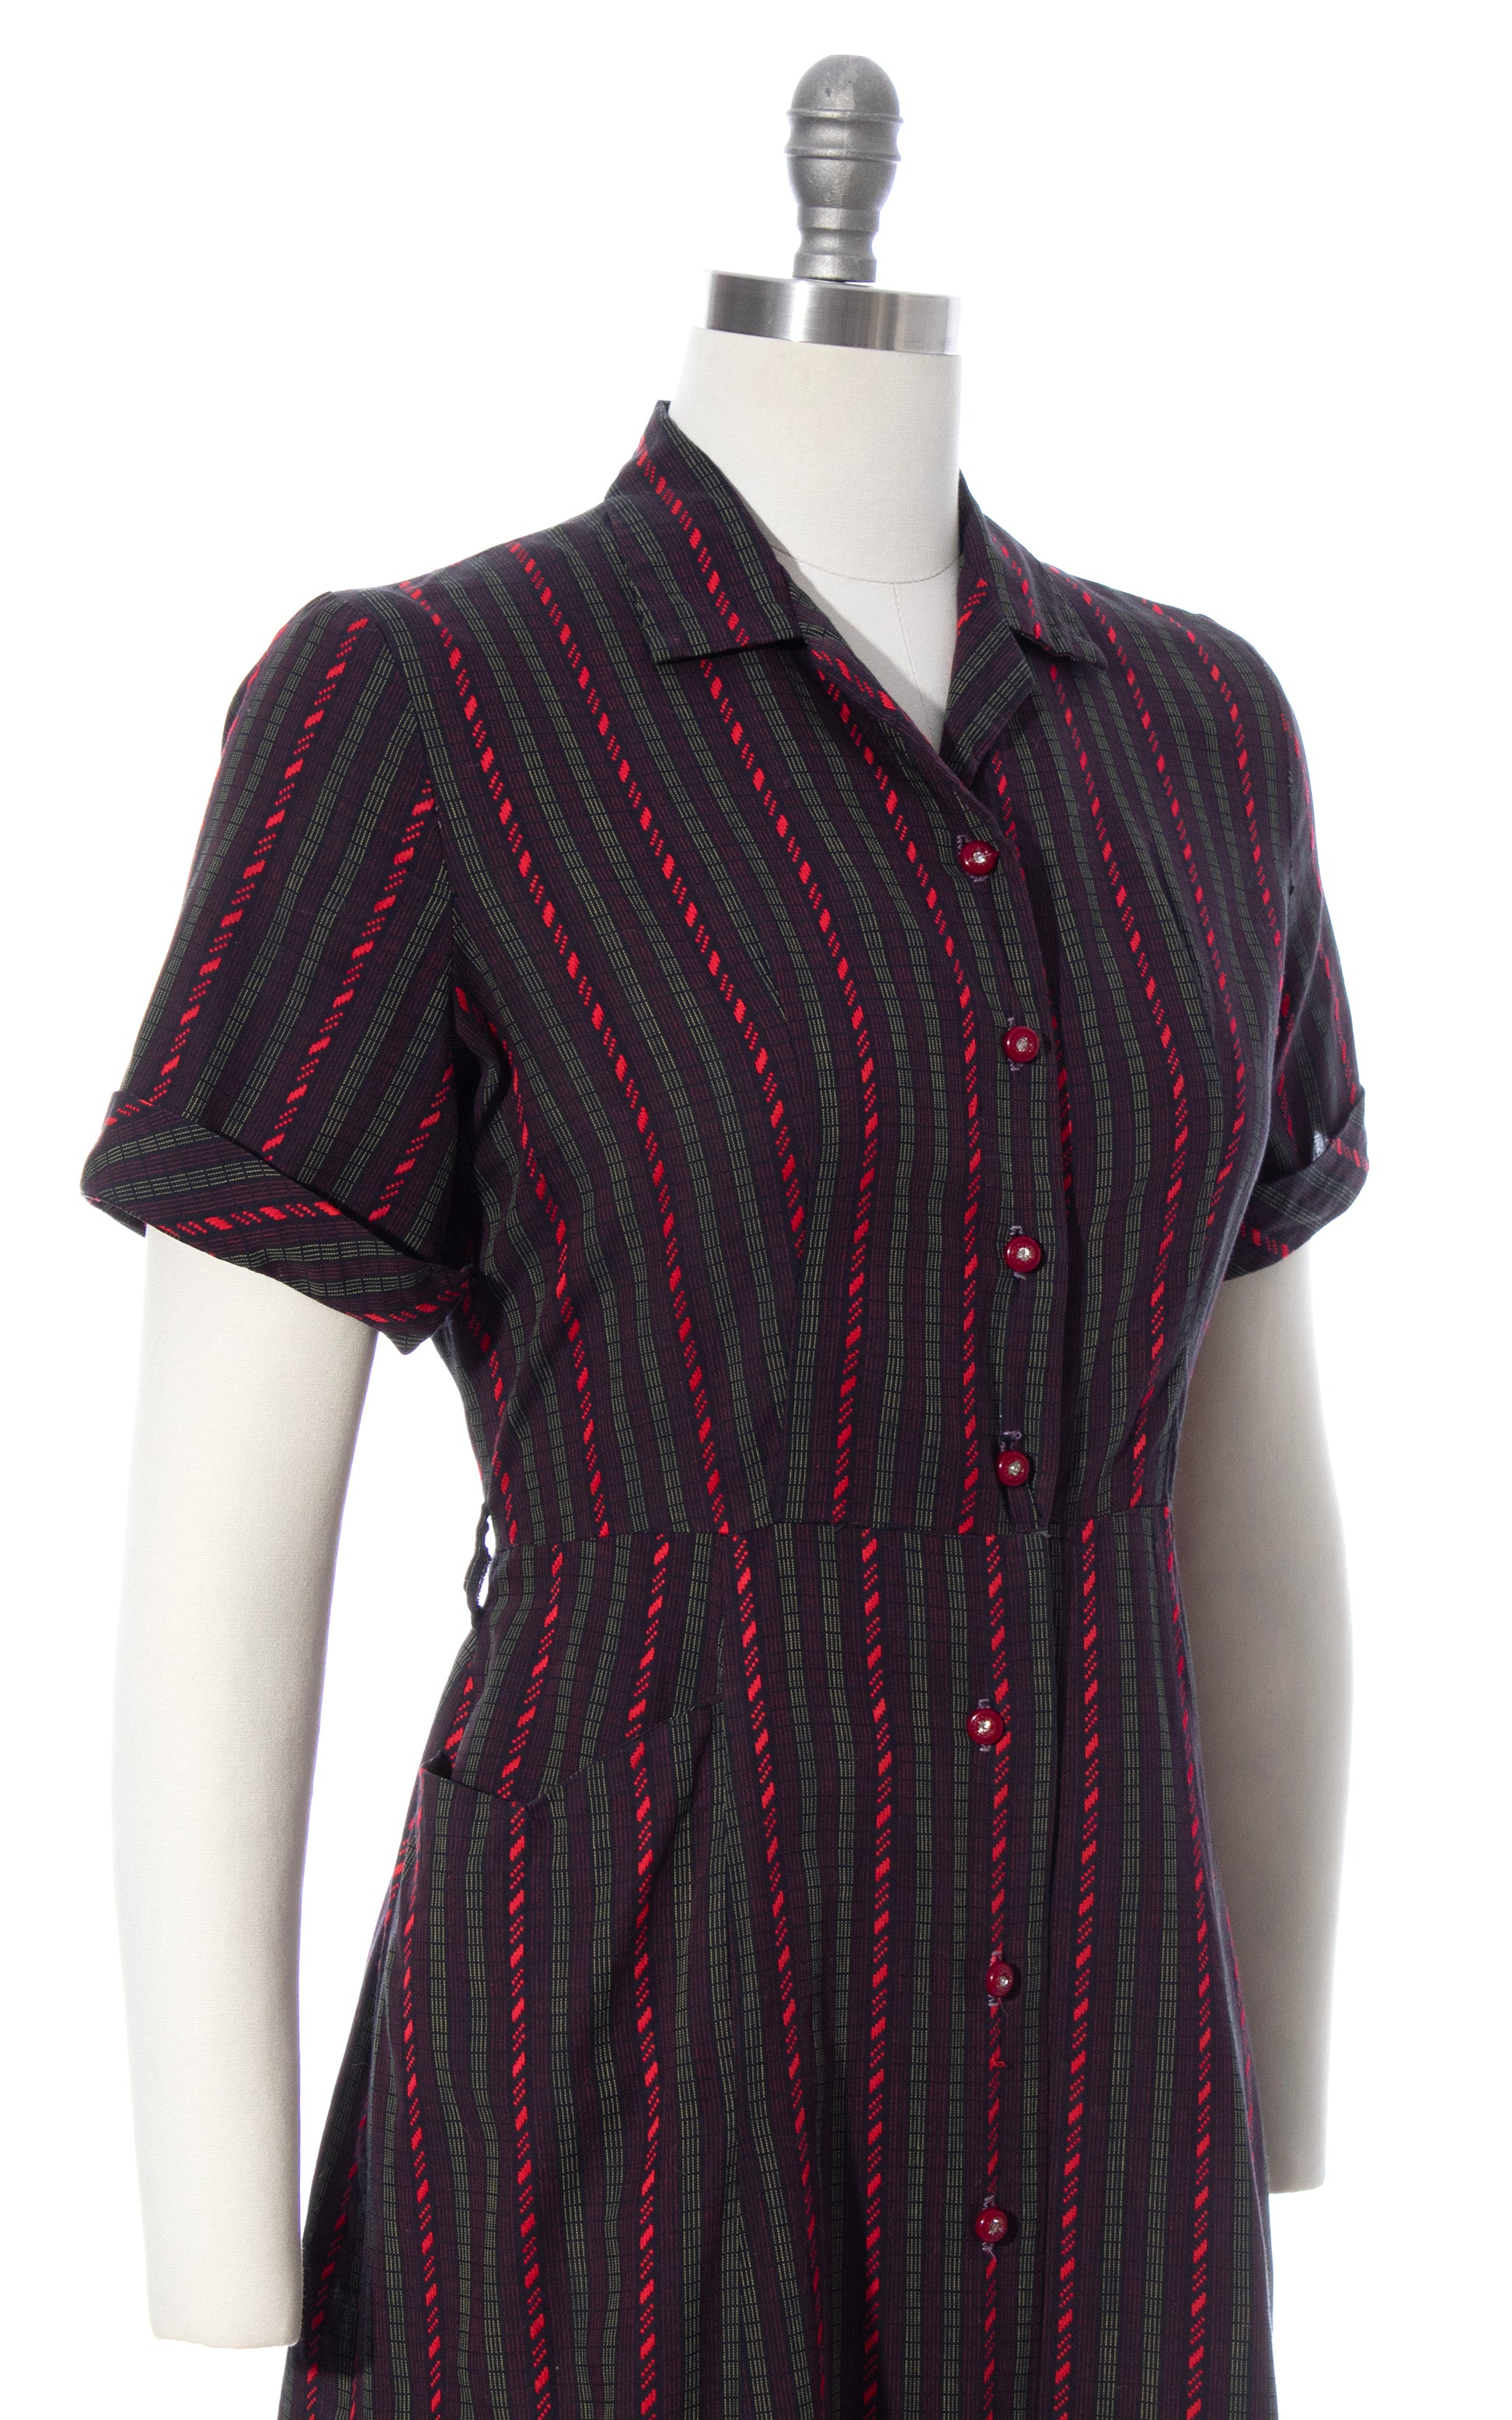 Vintage 50s 1950s Striped Cotton Black Red Shirtwaist Dress with Pocket BirthdayLifeVintage